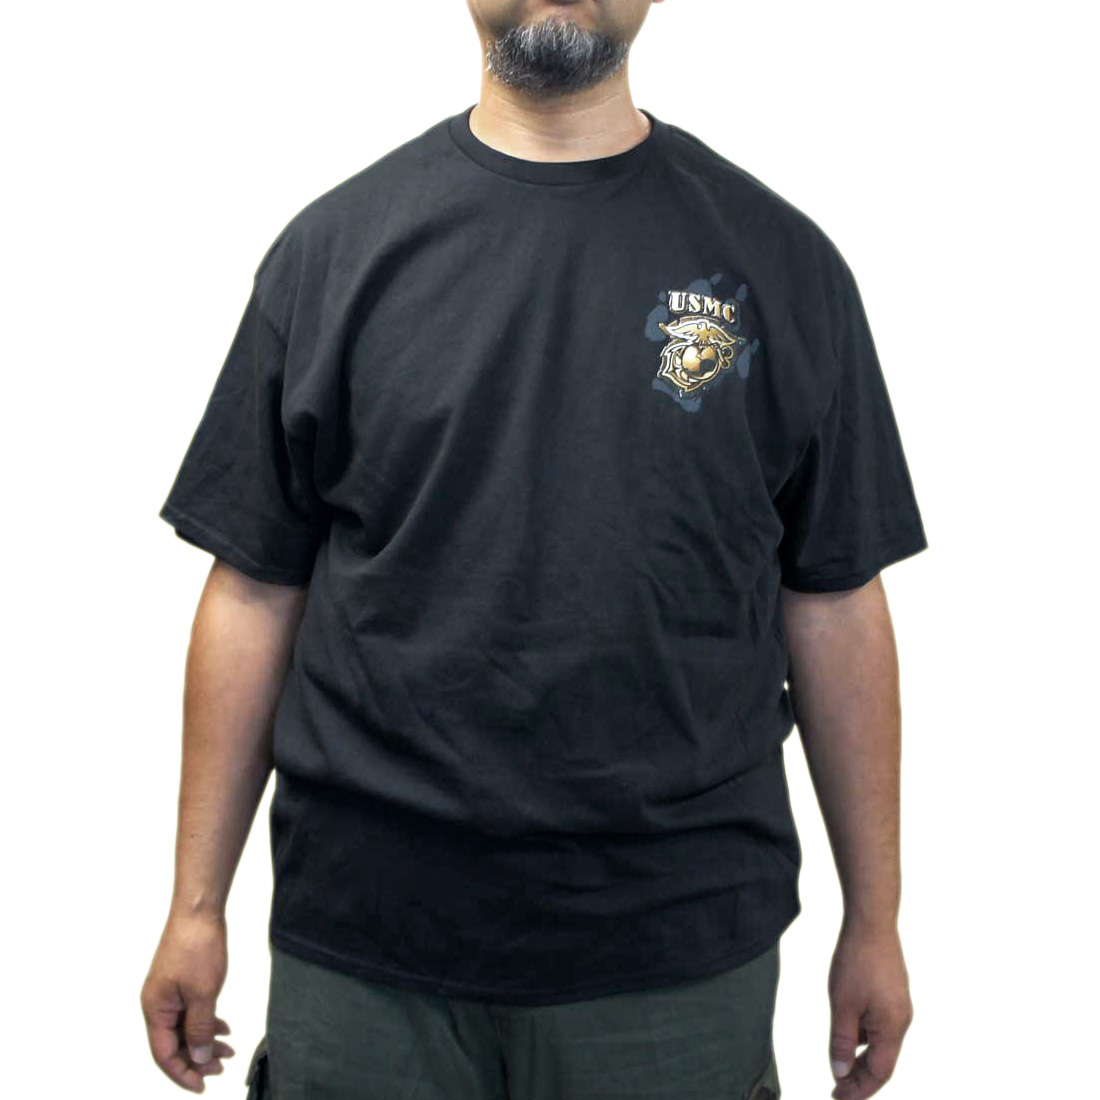 ROTHCO USMC アメリカ海兵隊 プリントTシャツ USA製 メンズM ヴィンテージ /eaa339253